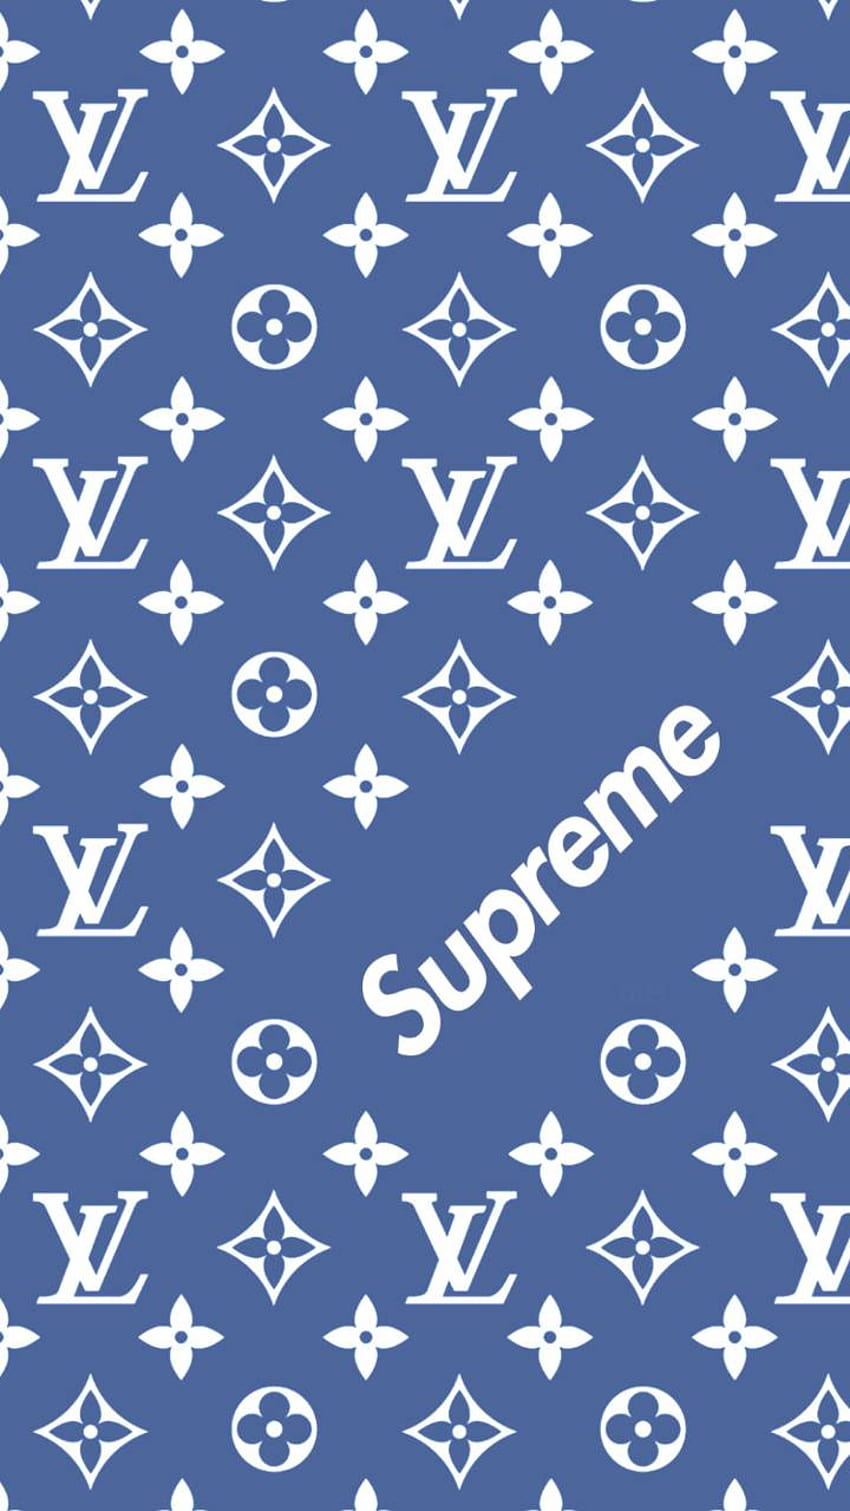 Supreme Louis Vuitton, louis vuitton naruto HD phone wallpaper